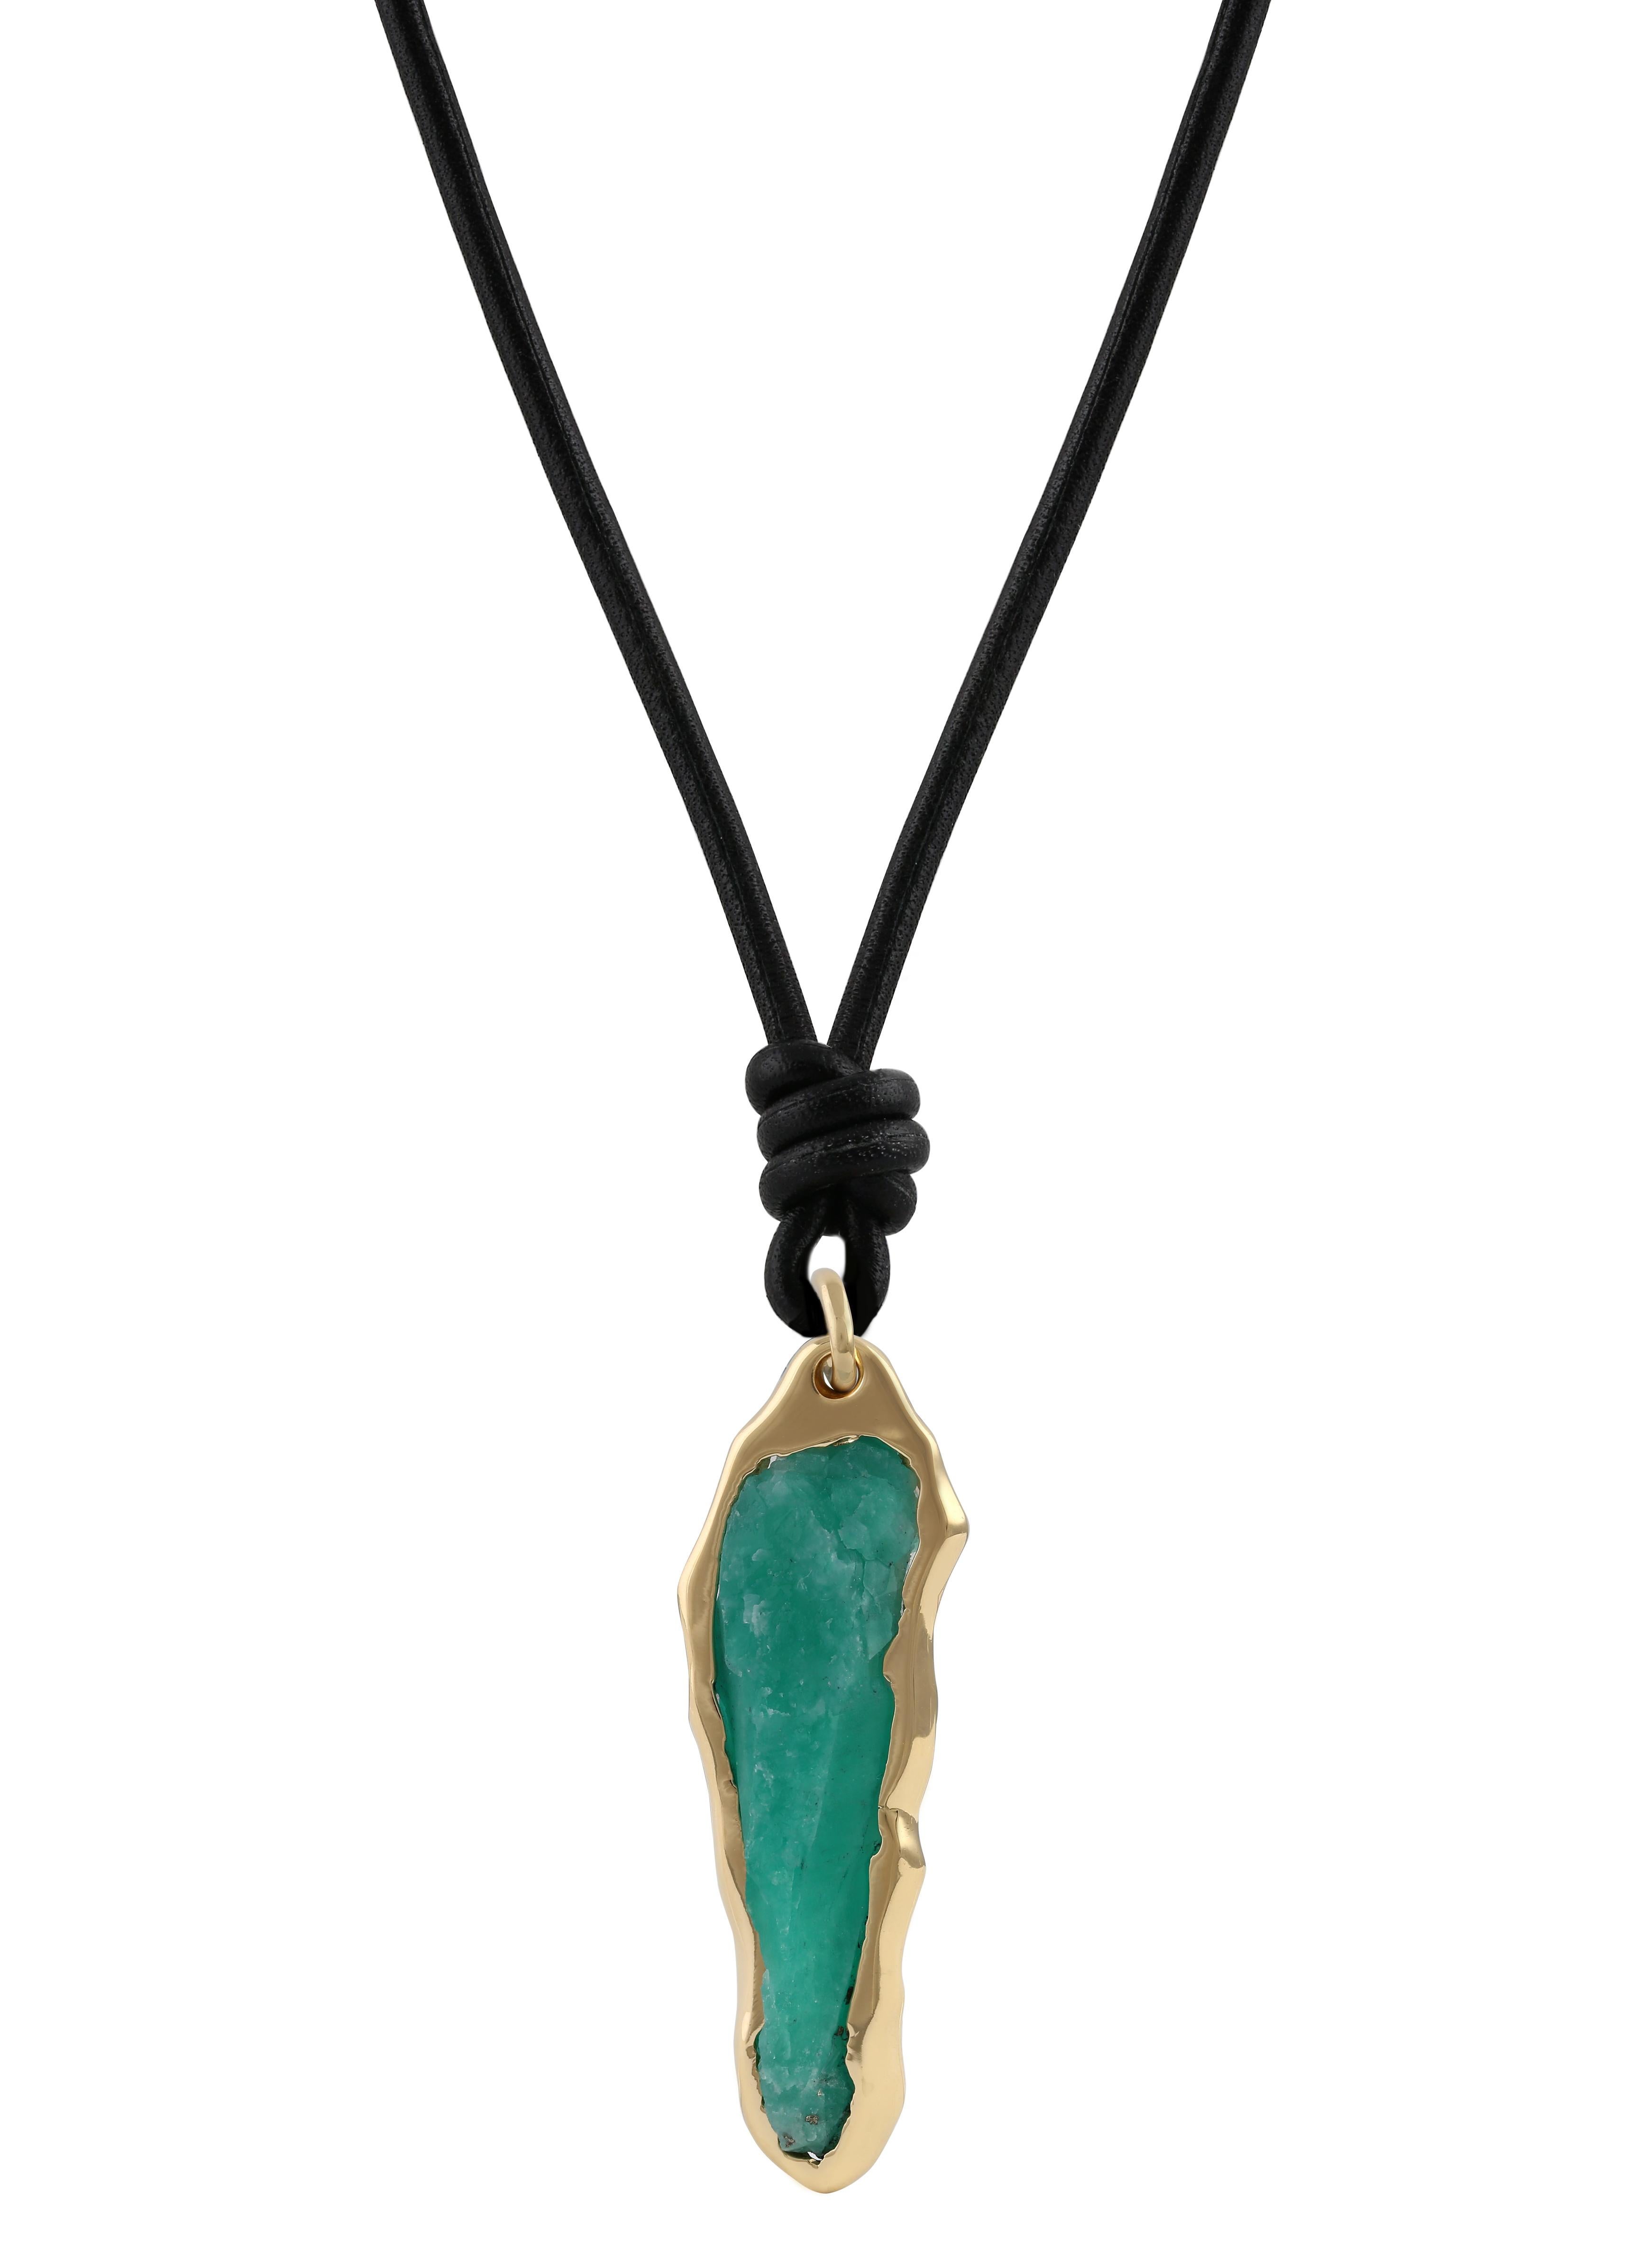 Modern Emerald ‘35.40 Carat’ and 18 Karat Yellow Gold Necklace